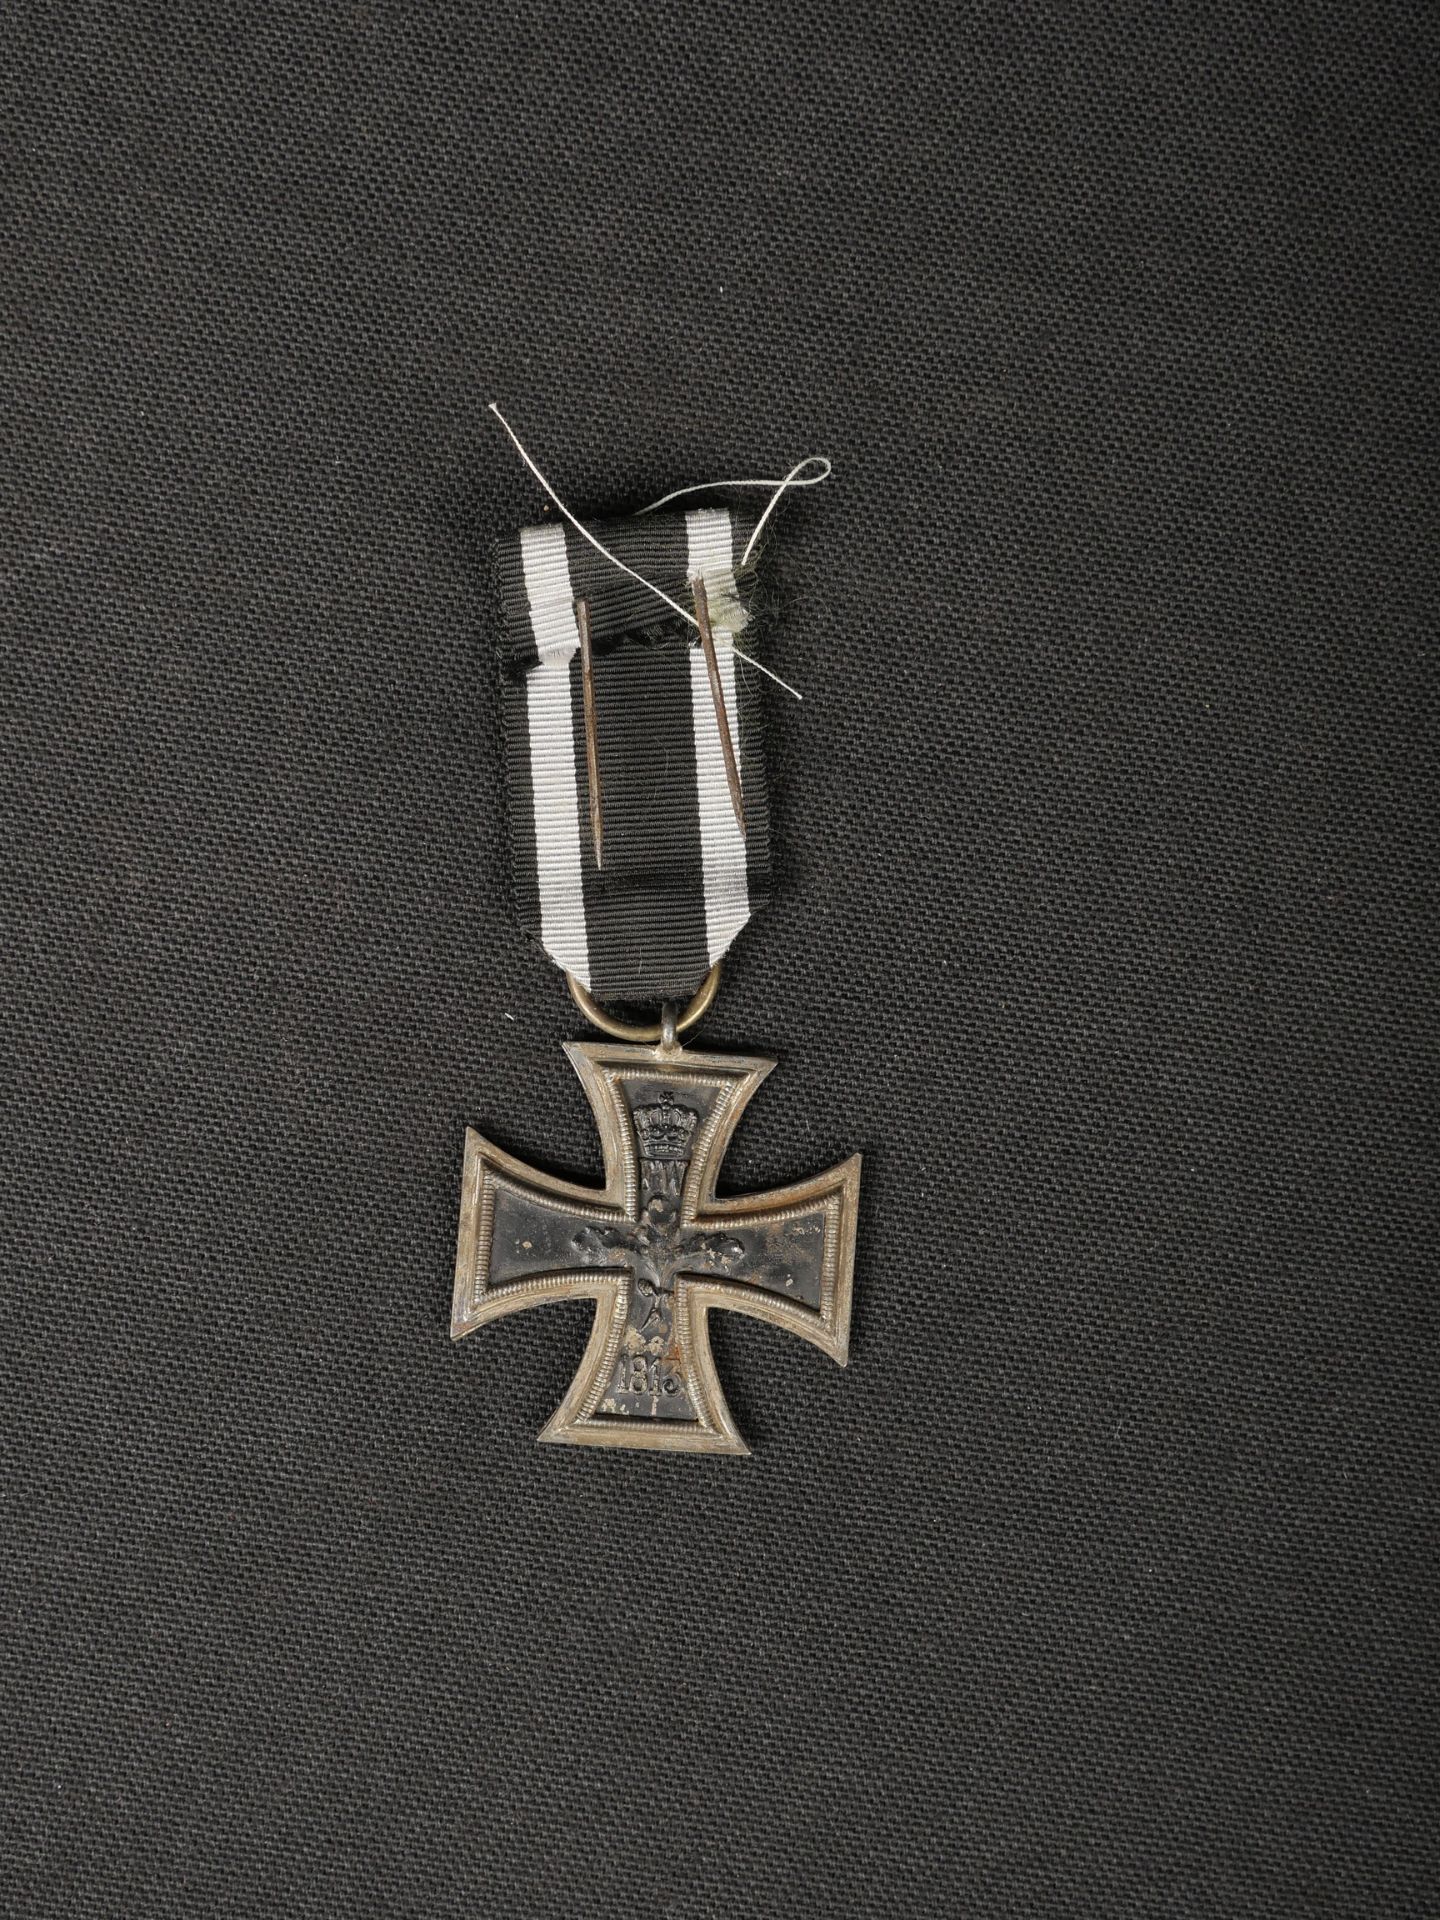 Croix de fer WWI. EK I WWI.  - Image 2 of 5